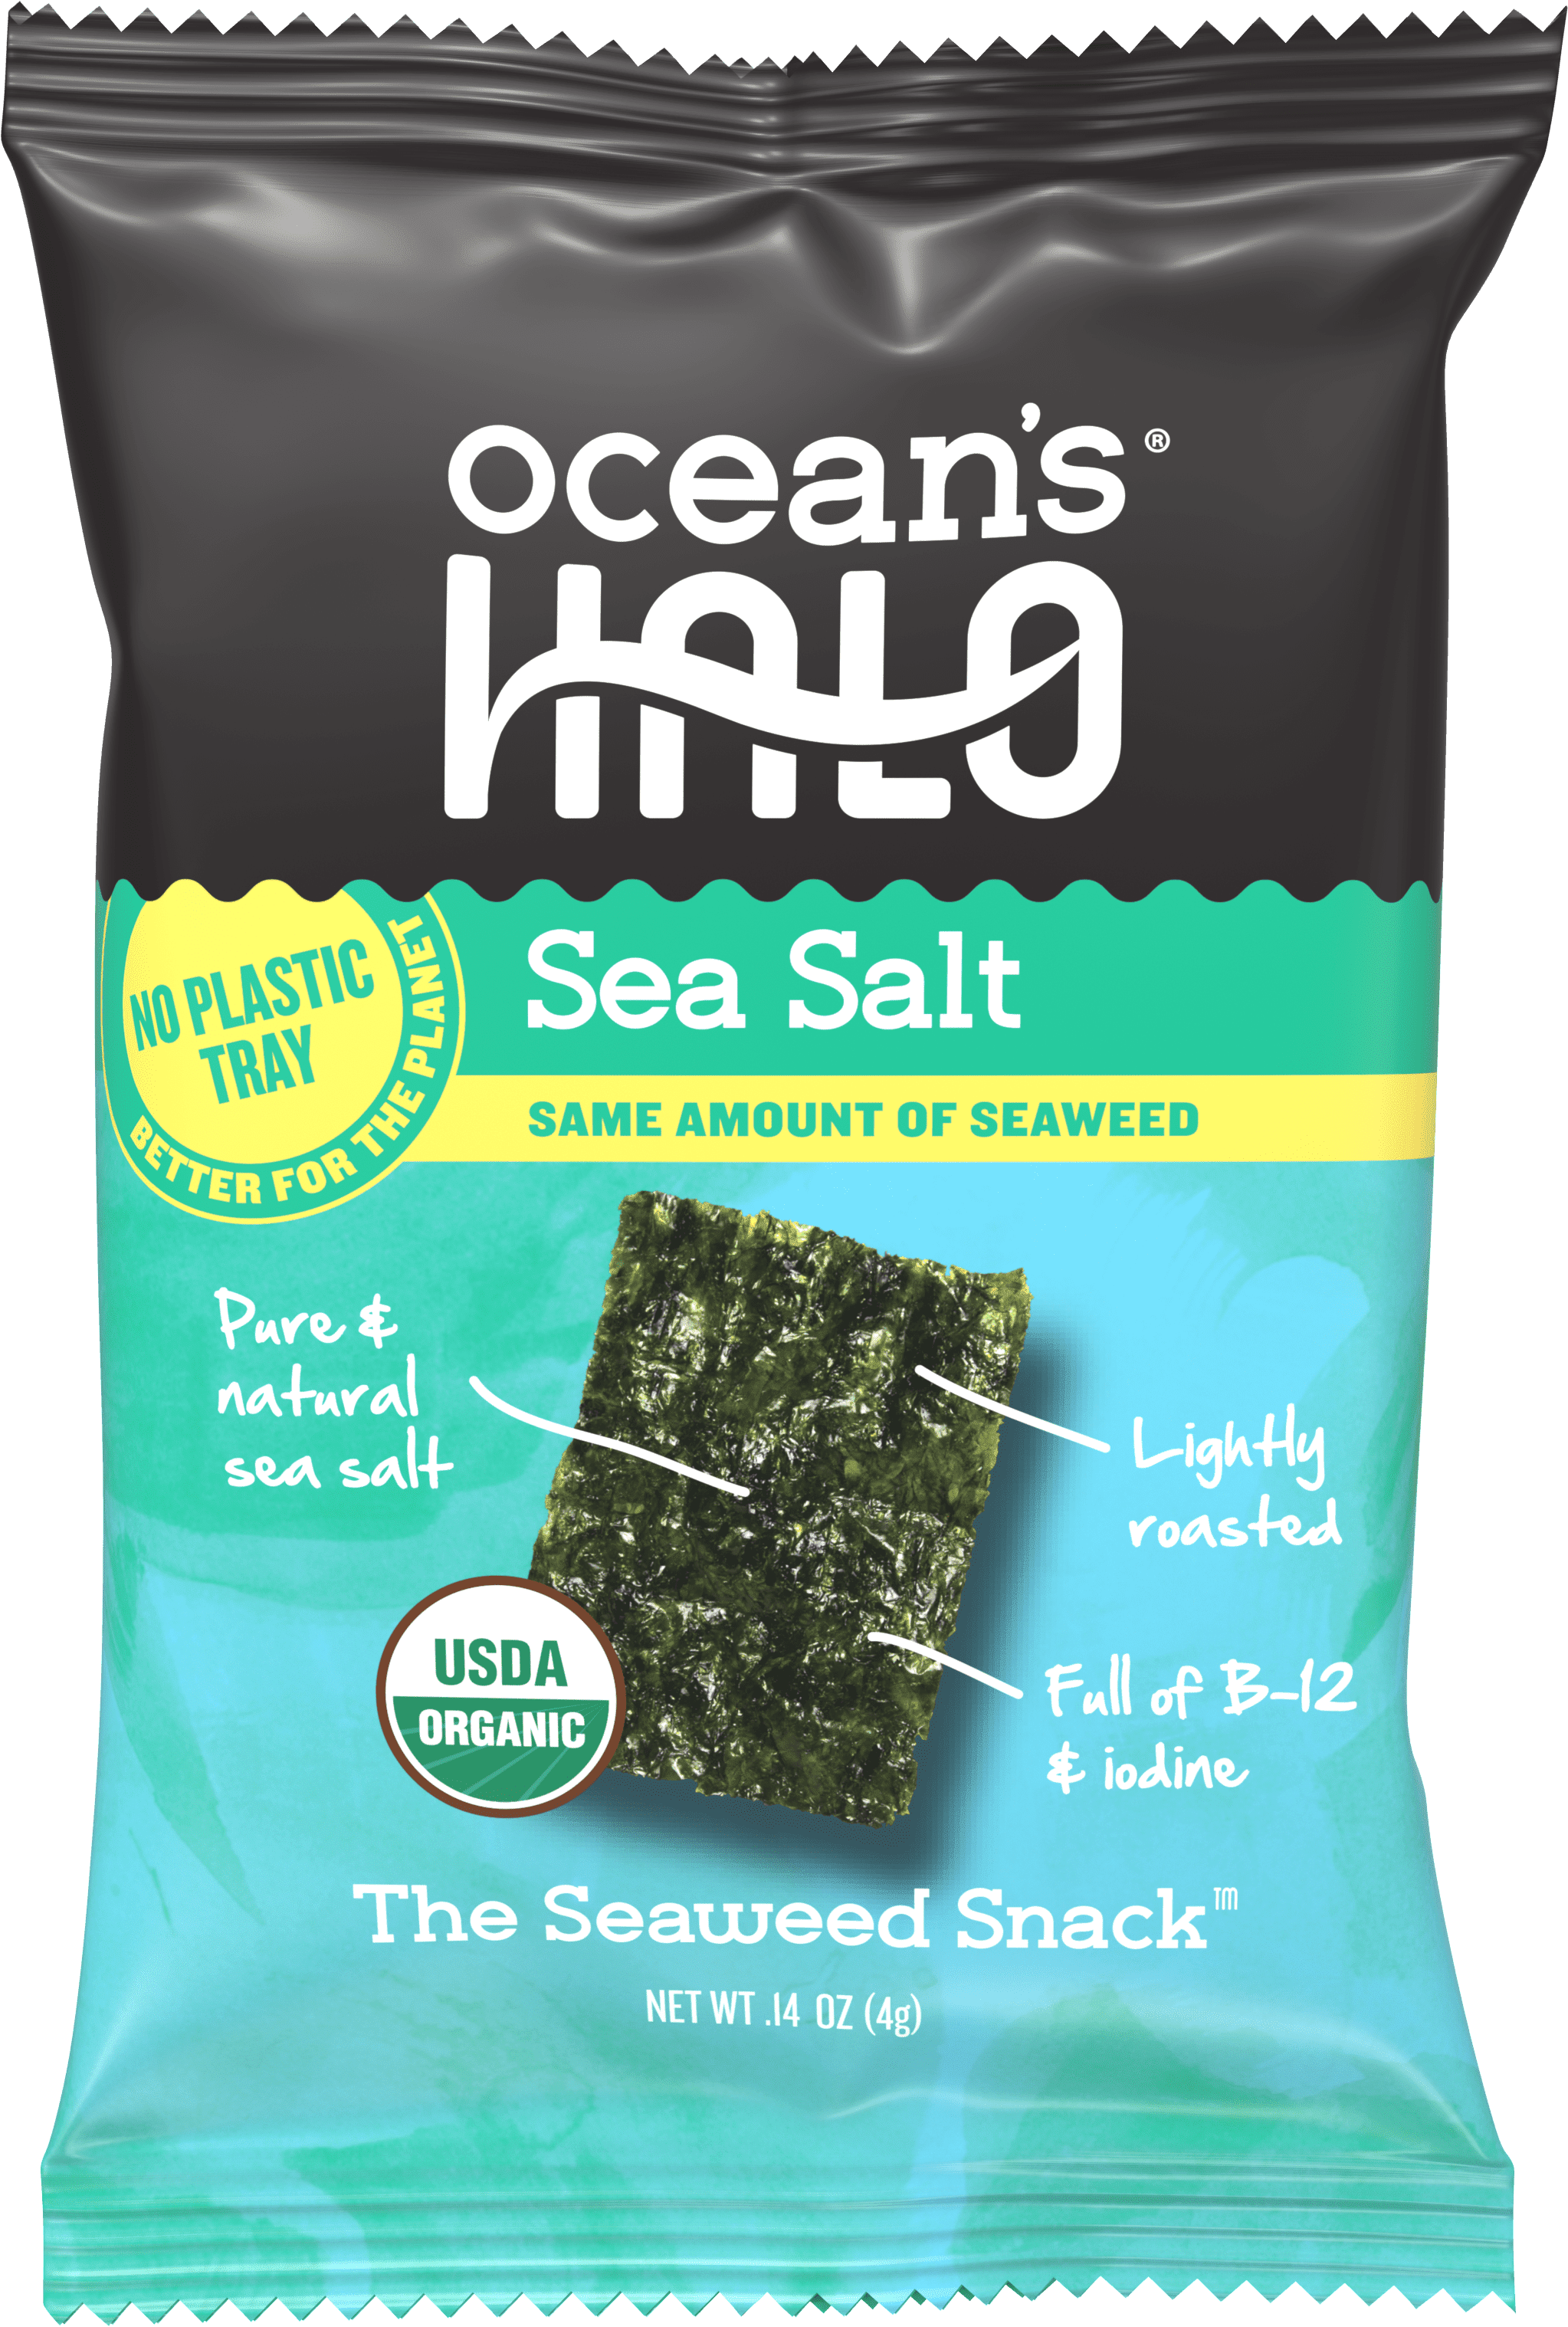 Ocean's Halo, Organic Trayless Seaweed Snack, Sea Salt, Vegan, No Plastic Tray, 1pk Nori, Shelf-Stable, 0.14 oz